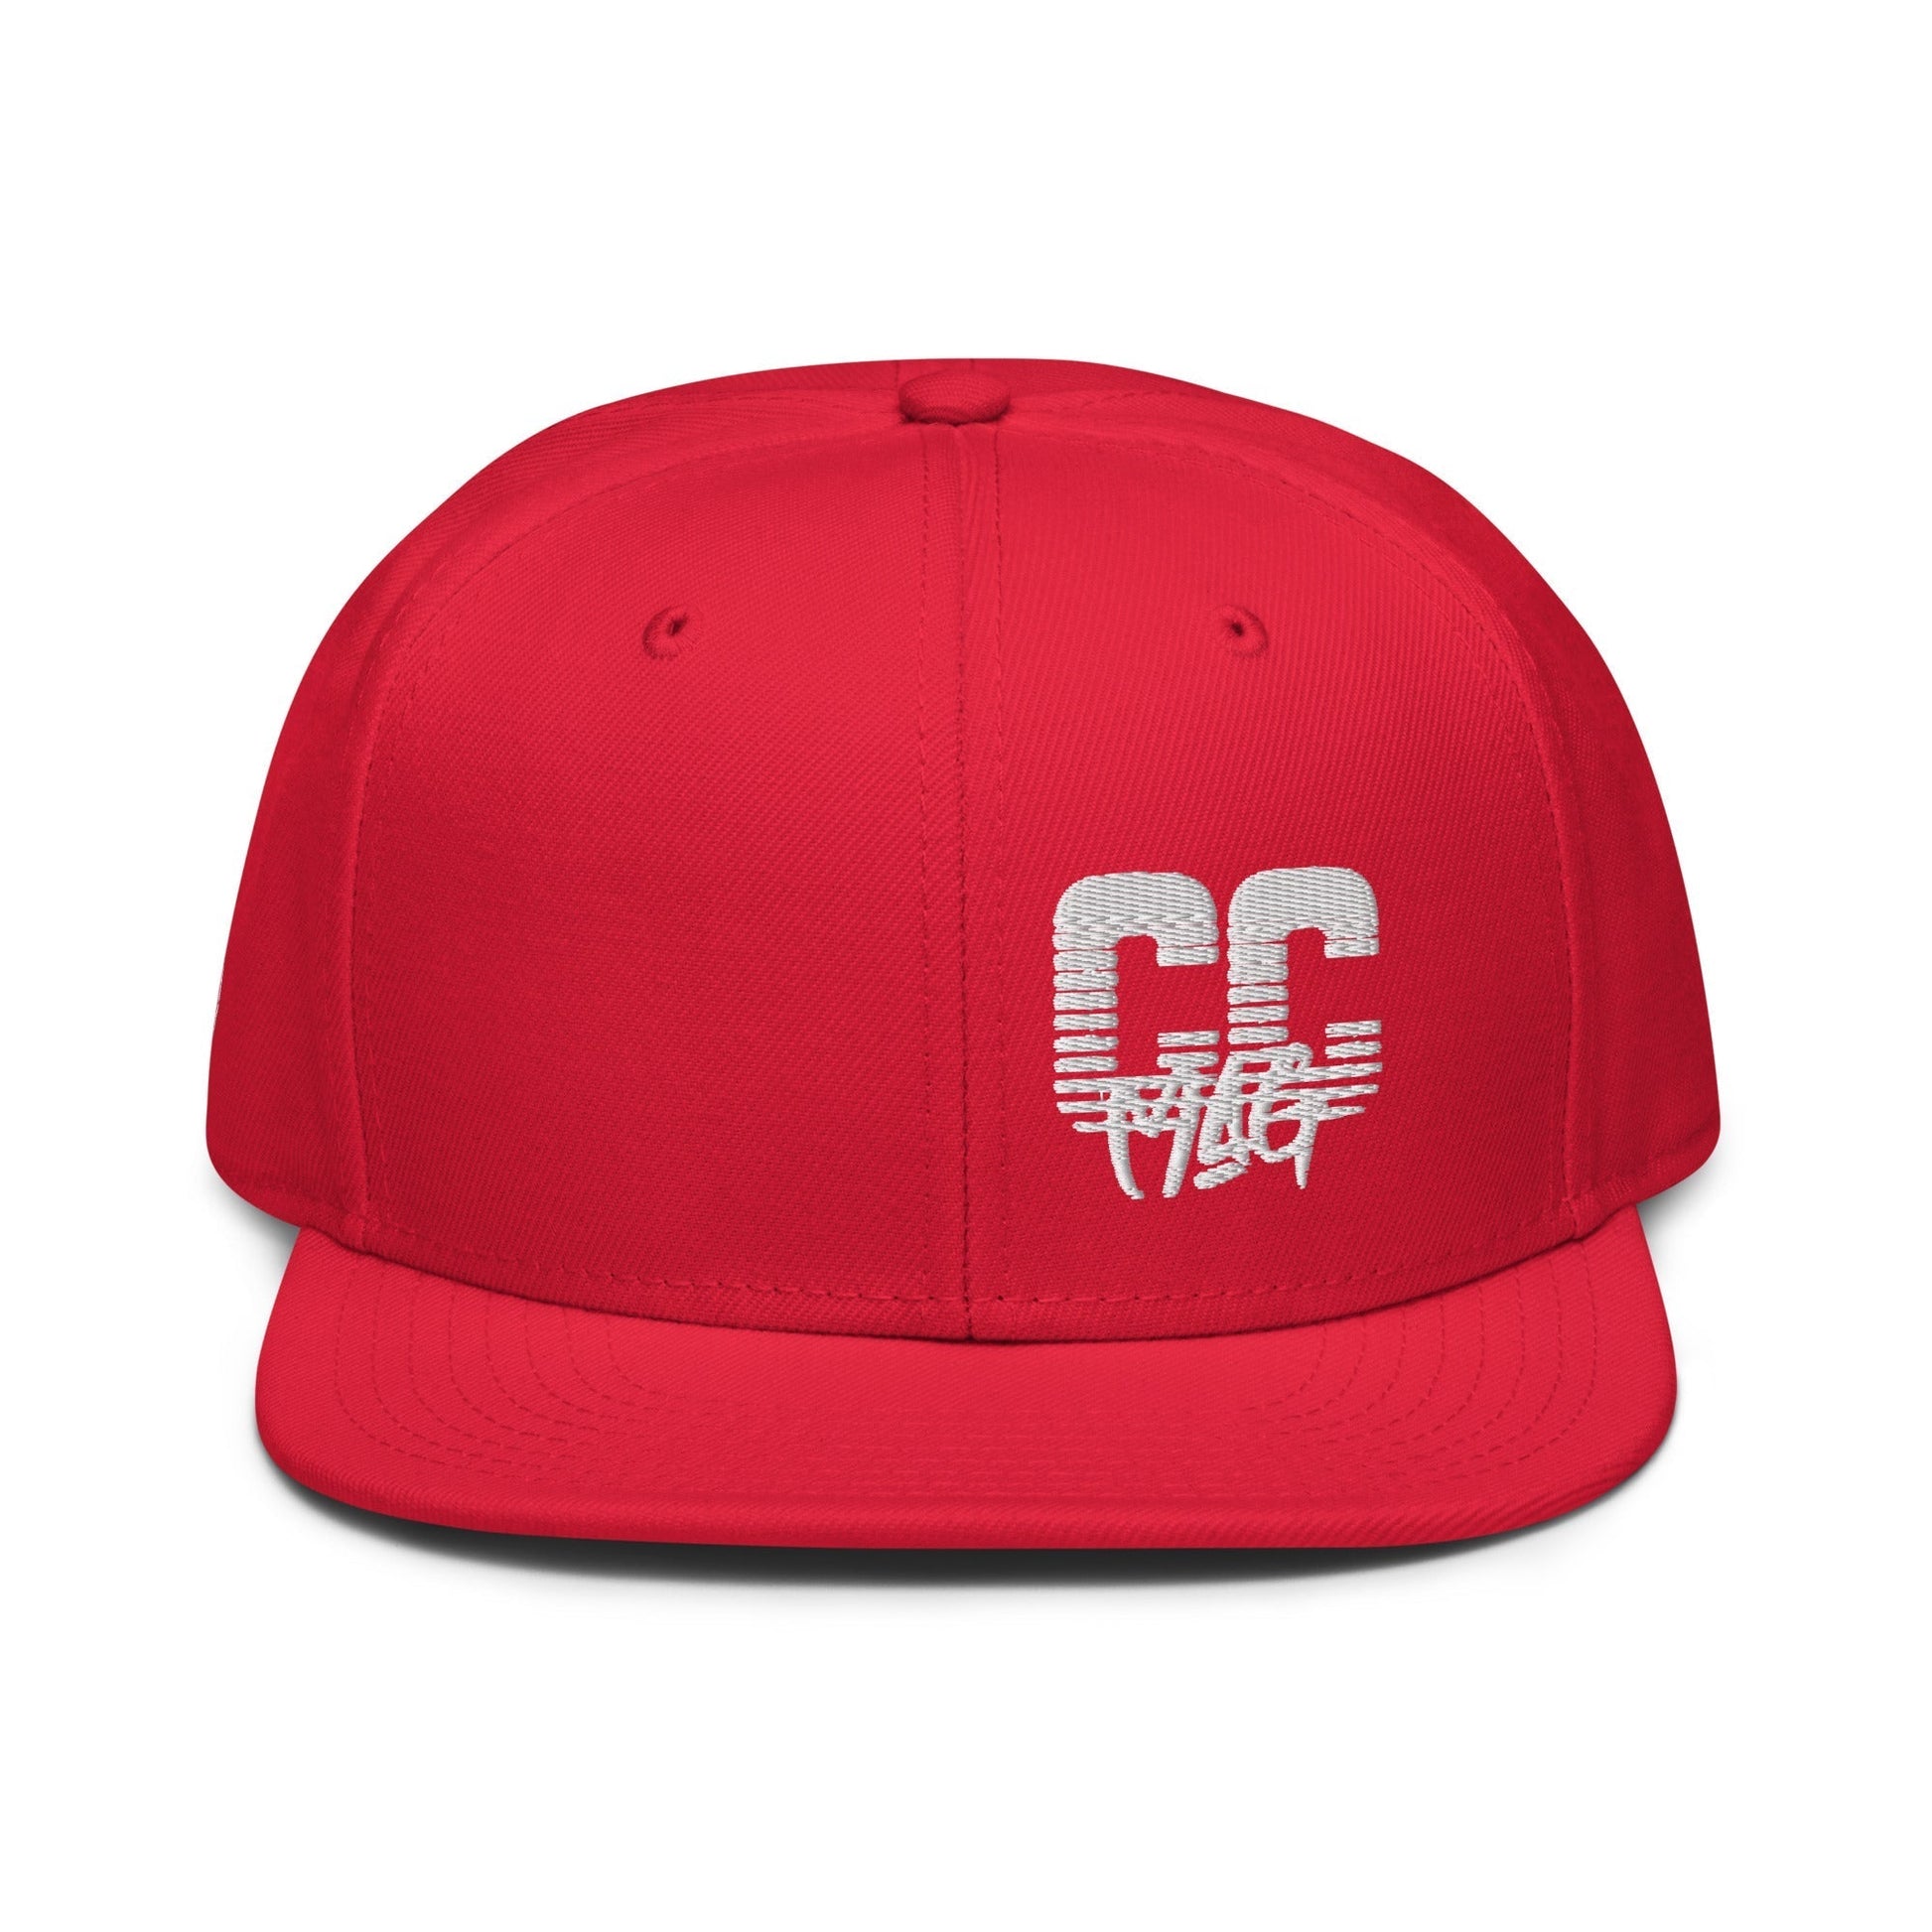 CC Mag White Logo Snapback Hat